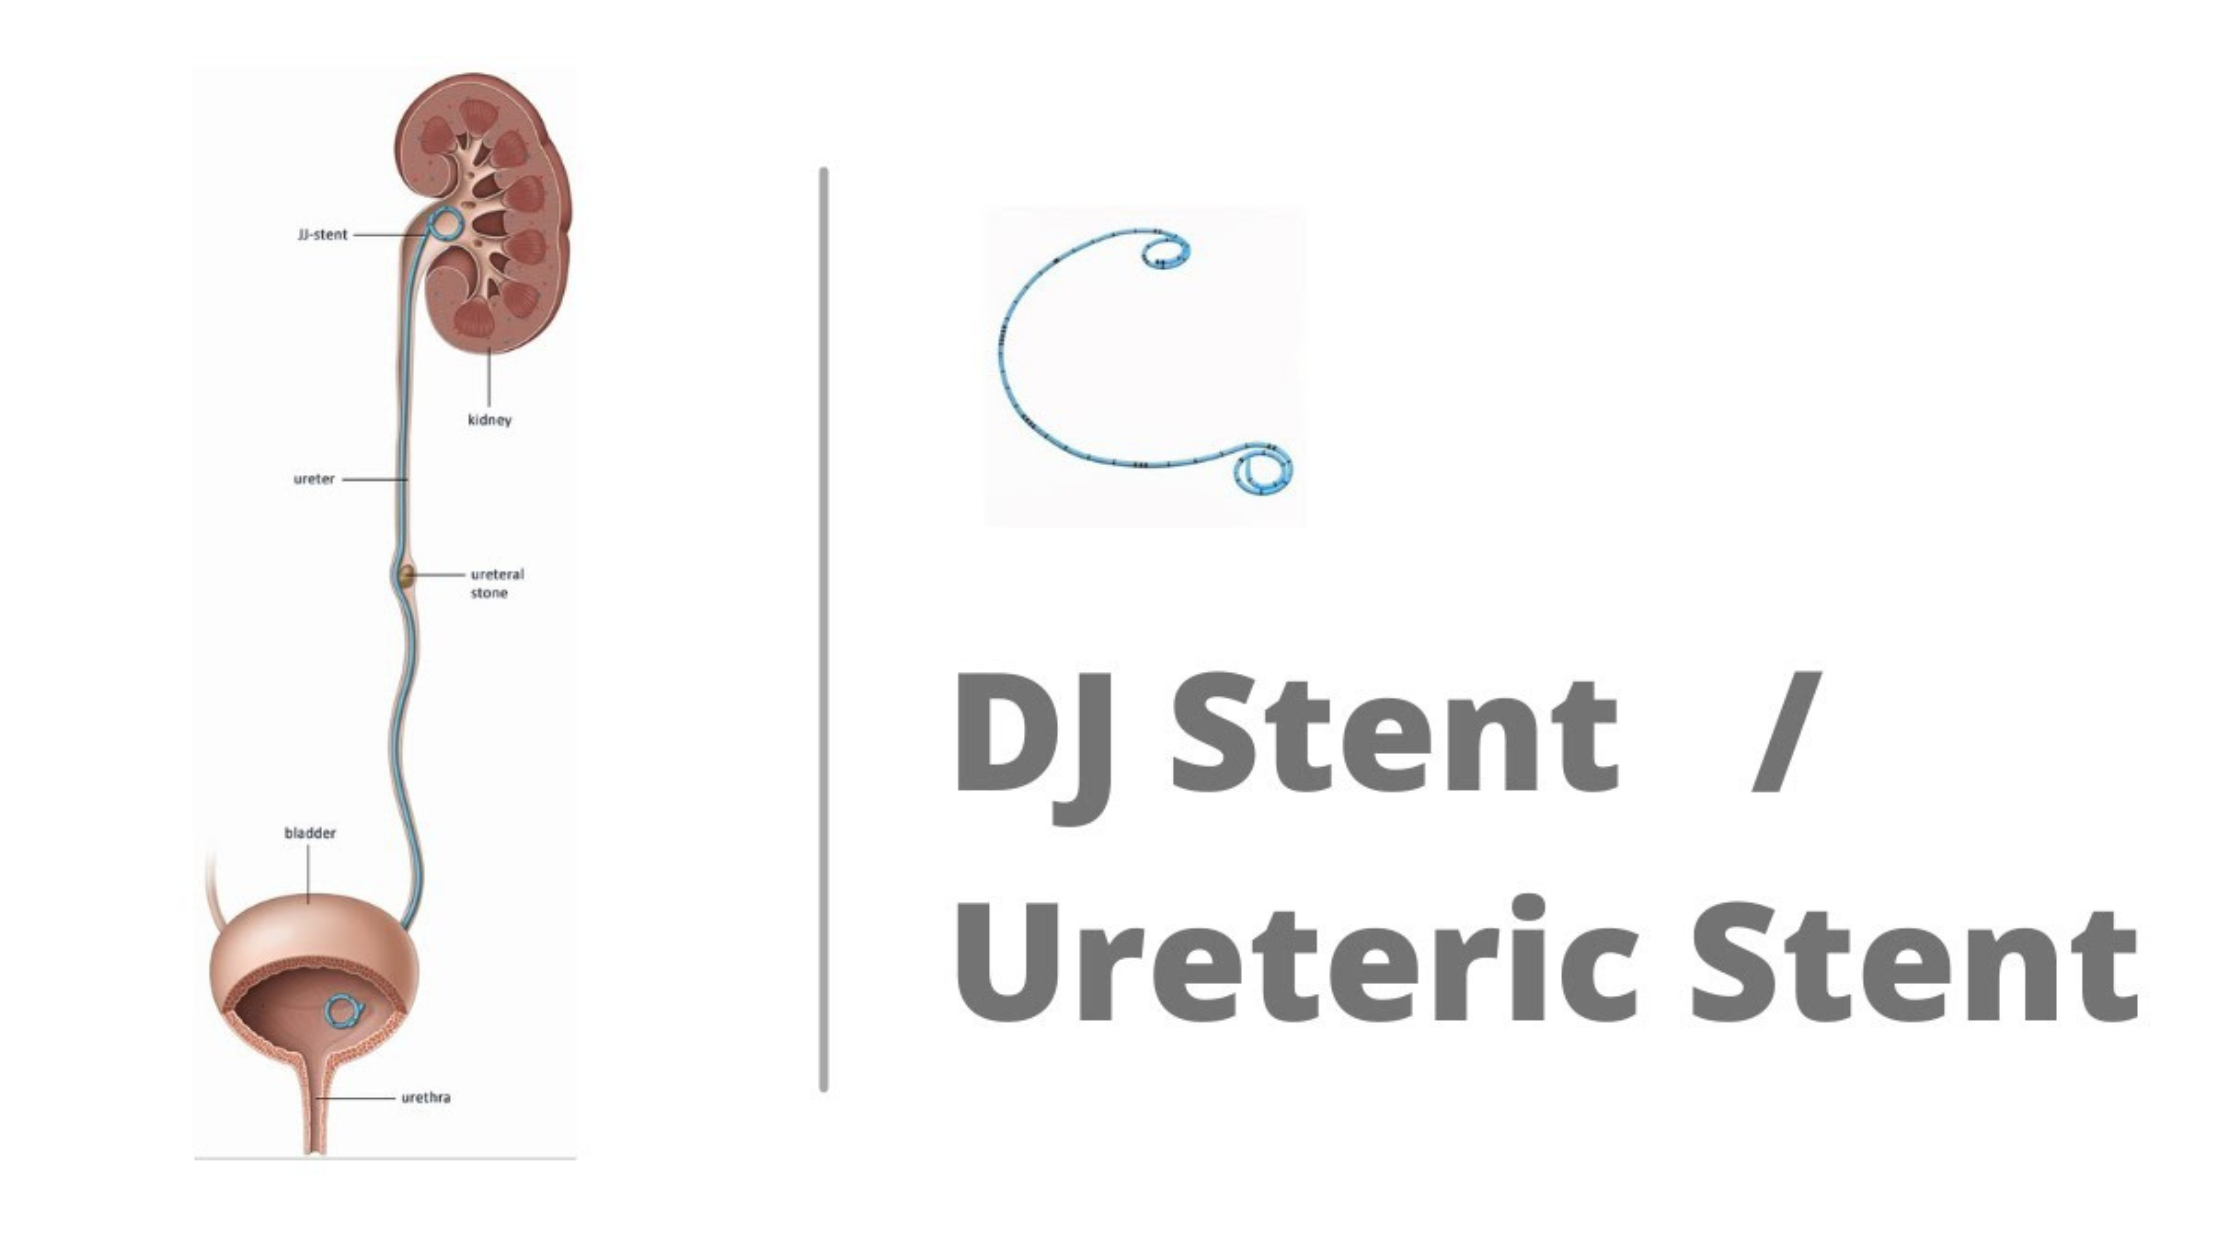 DJ Stent for Kidney Stones